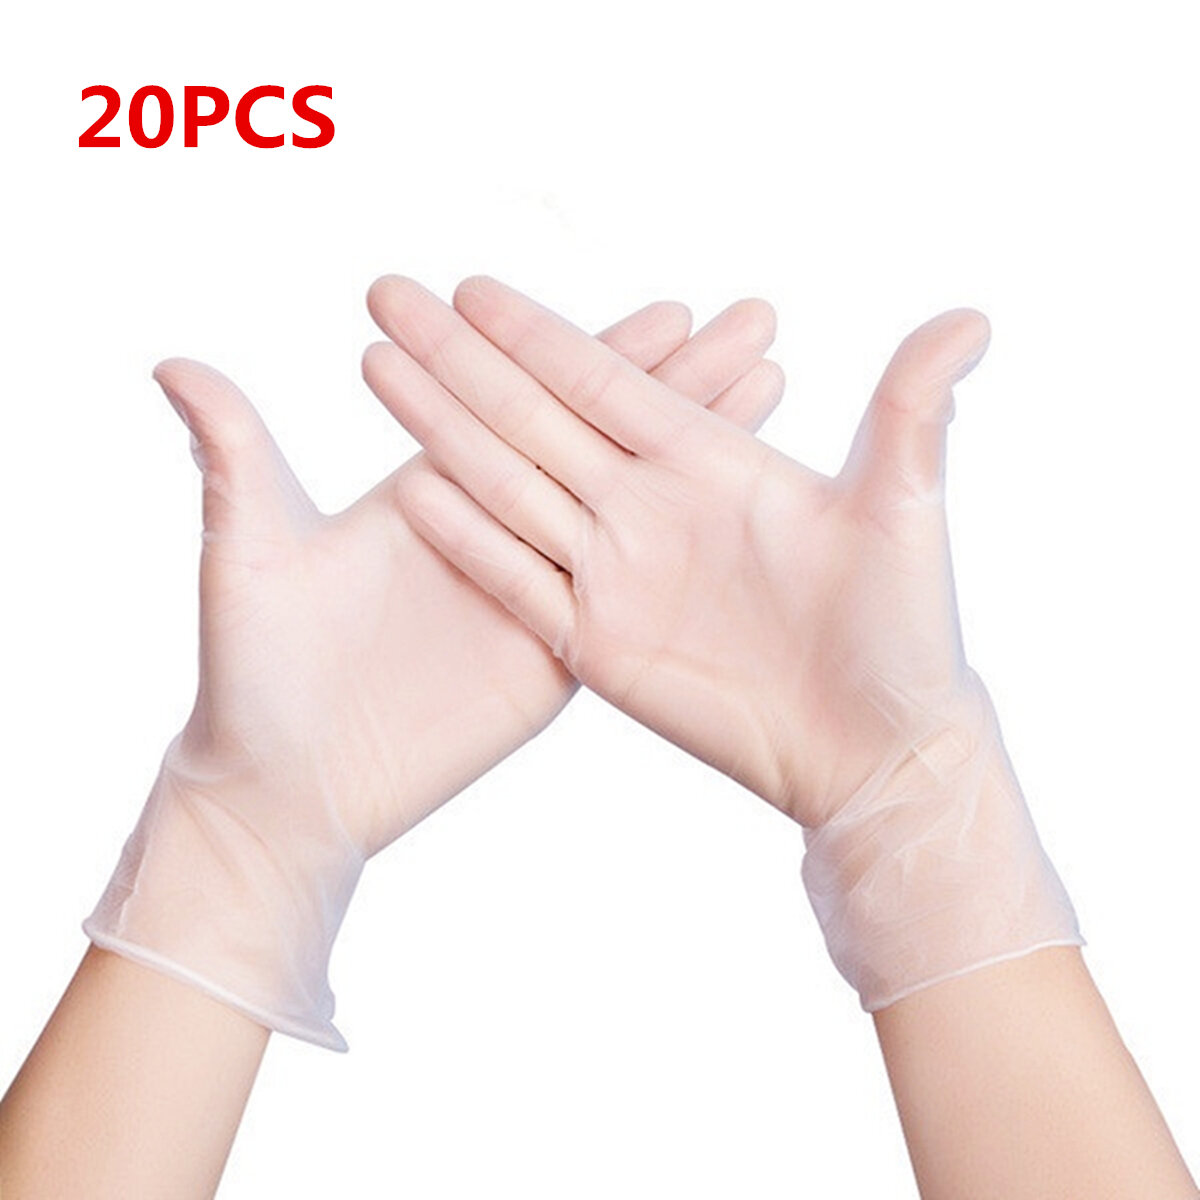 MIANDASHI 20 pezzi di guanti monouso in PVC per barbecue Guanti impermeabili anti-infezione di sicurezza